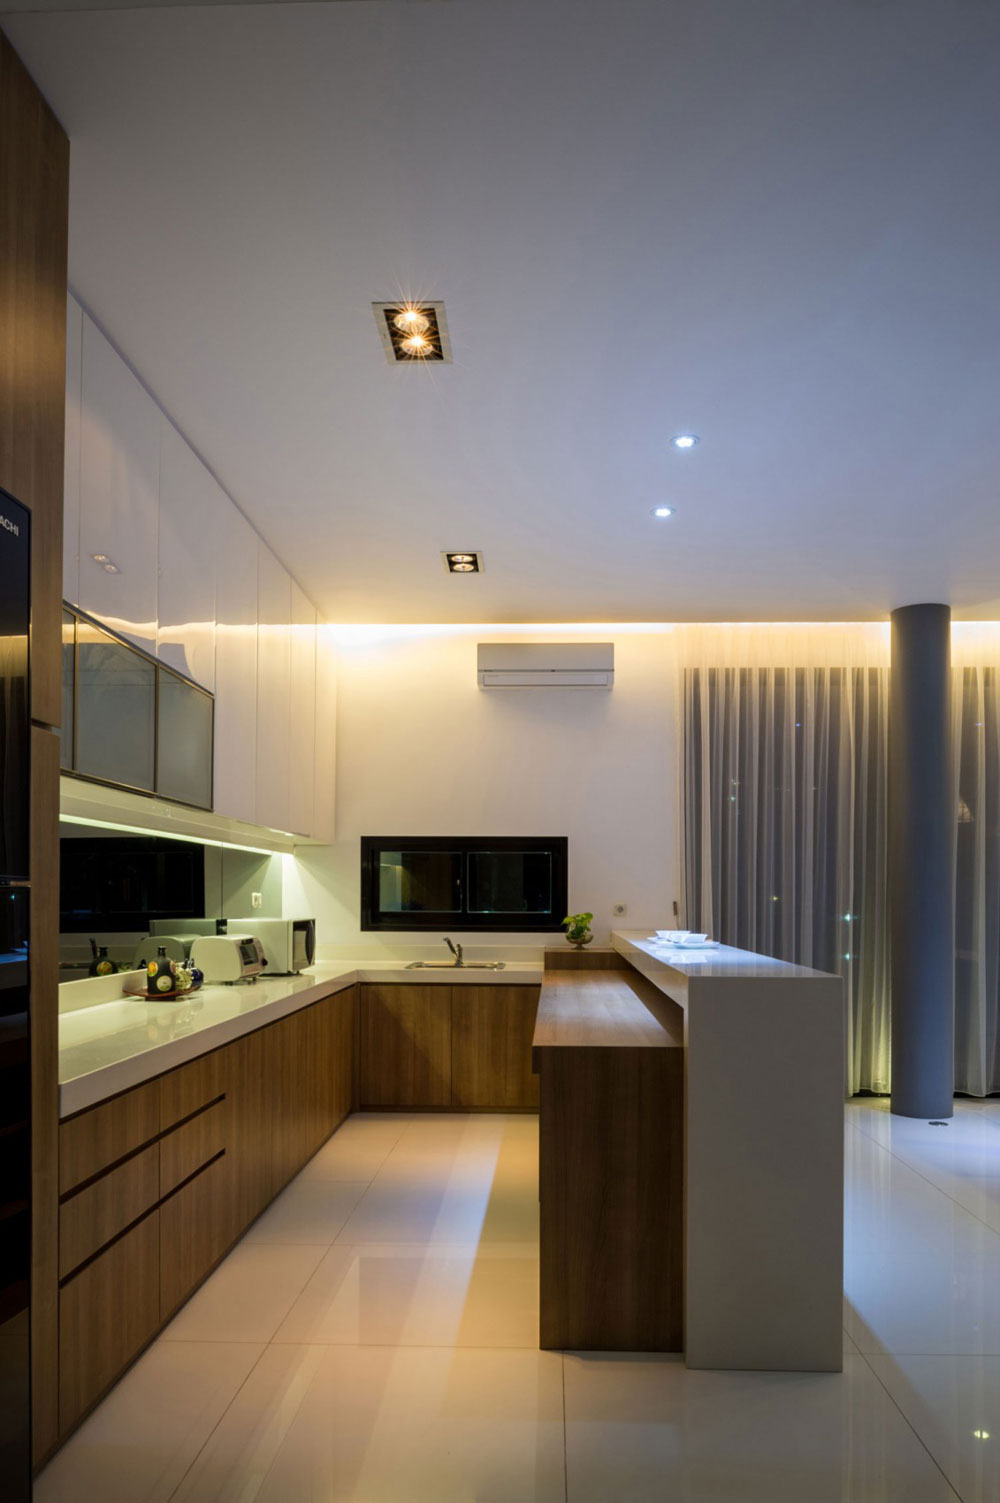 Kitchen-interior-design-for-apartments-to-create-the-perfect-kitchen-5-kitchen-interior-design for apartments to create the perfect kitchen